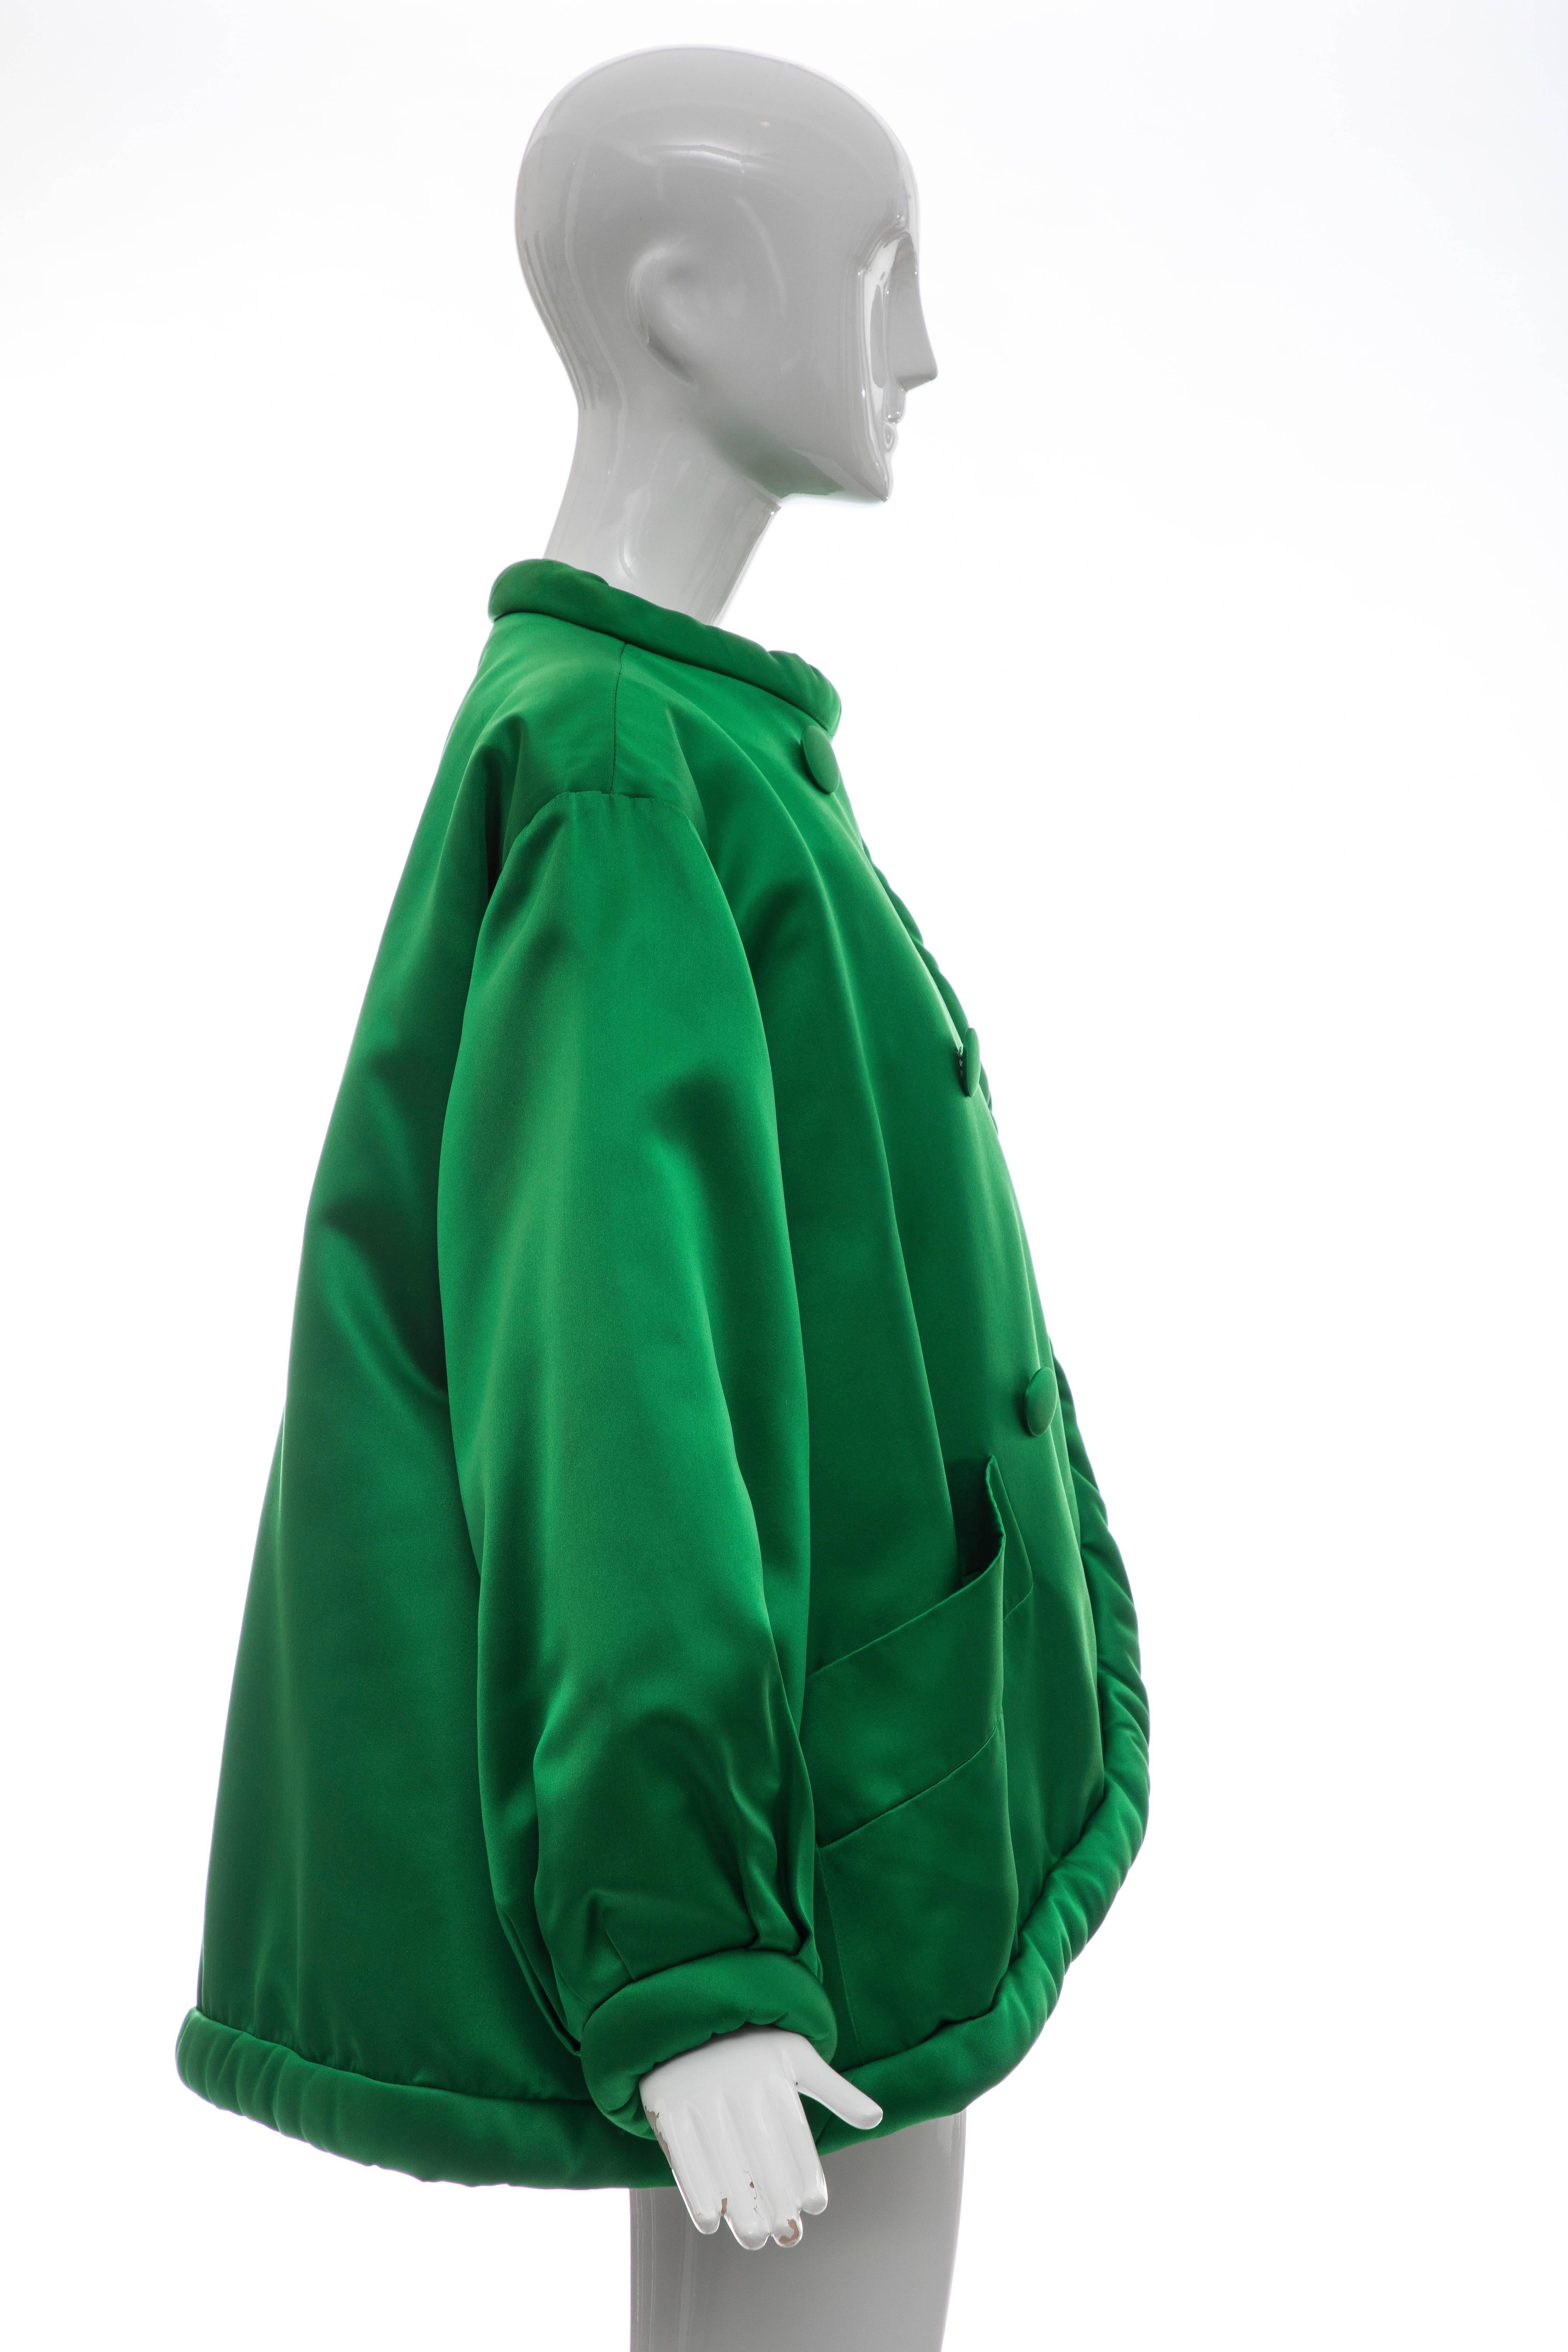 Women's Yves Saint Laurent Rive Gauche Emerald Silk Satin Evening Jacket, Circa 1980's